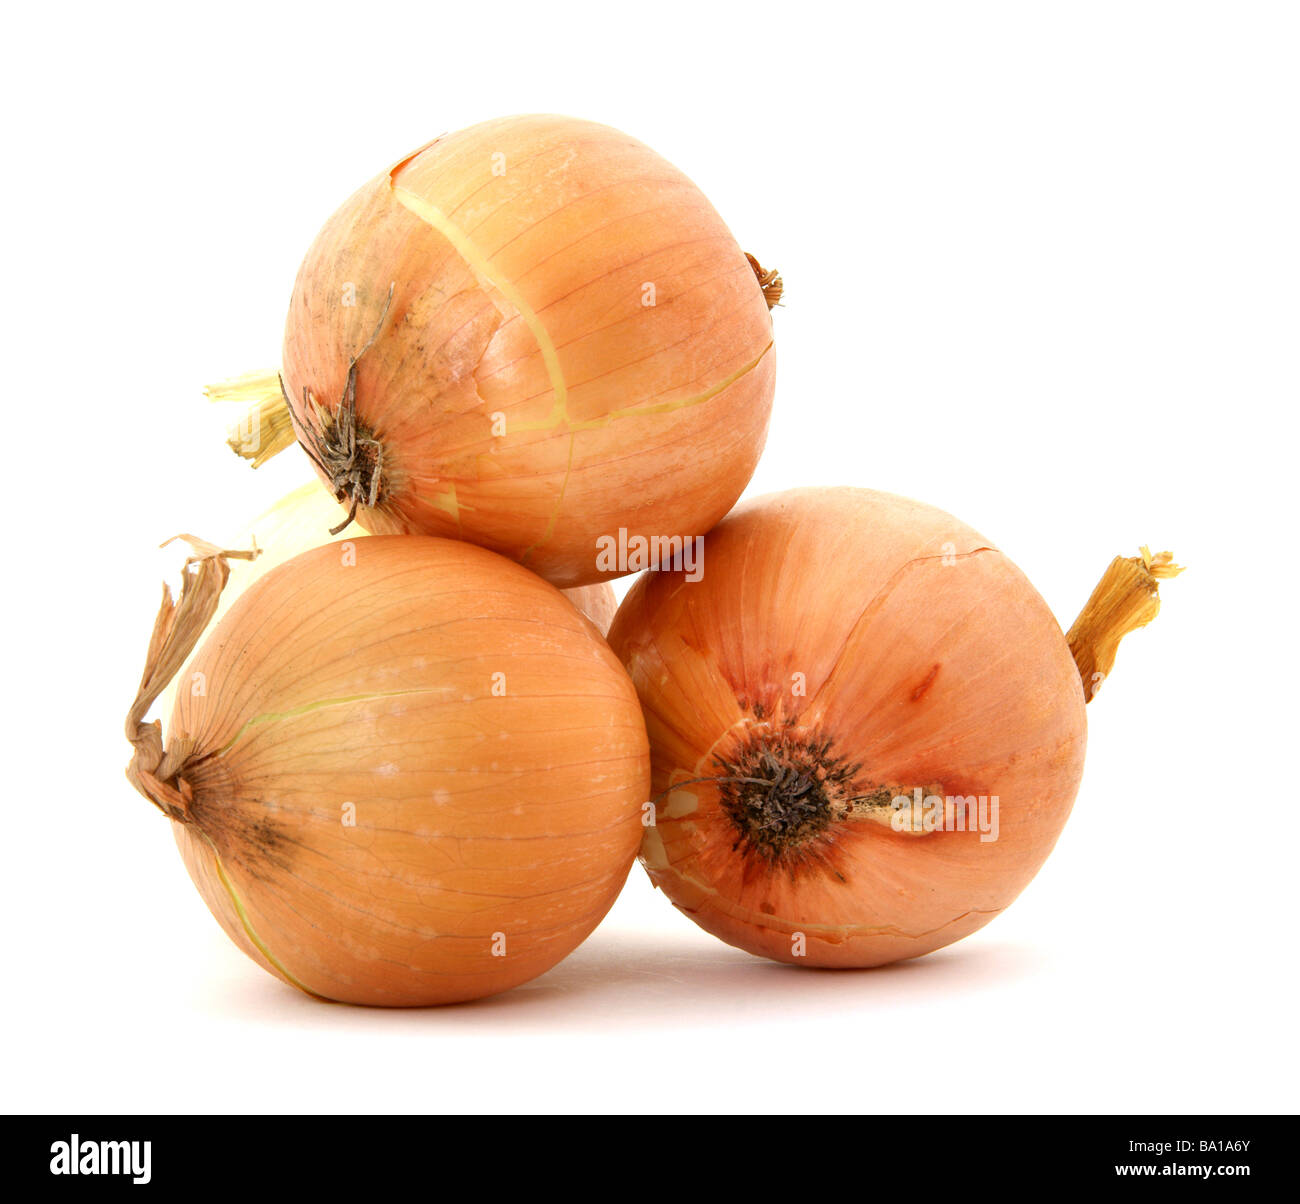 Utility onions Stock Photo